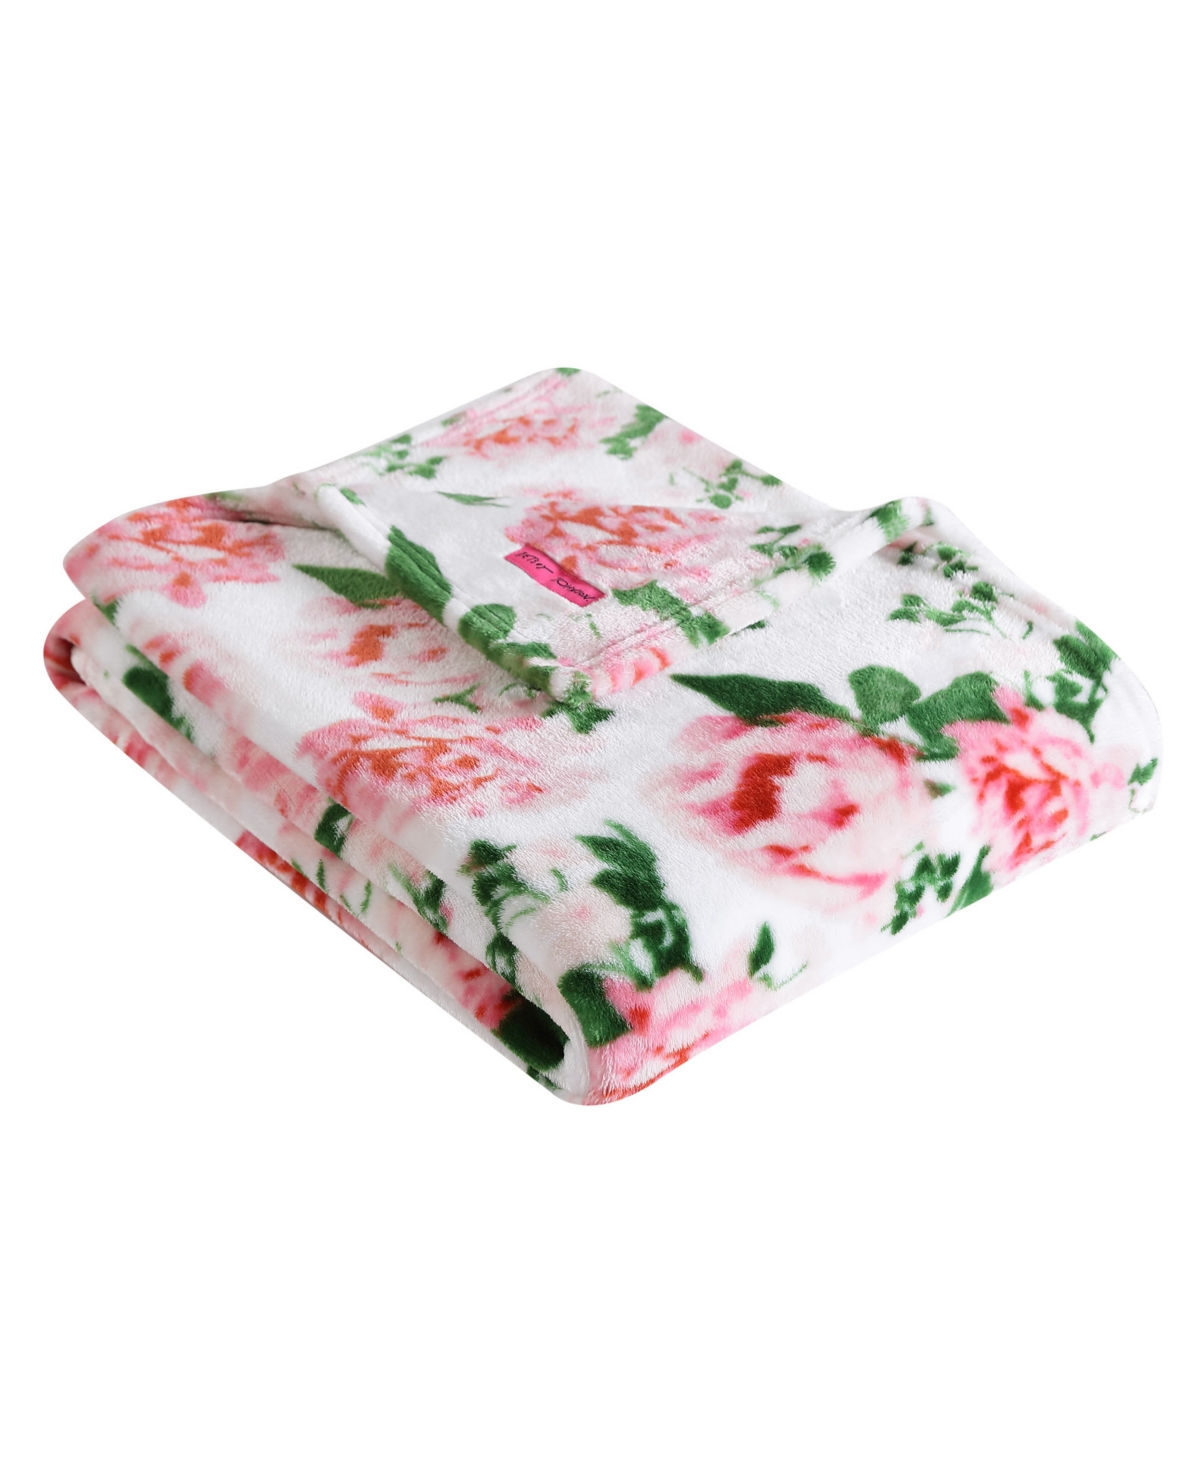 Betsey Johnson Blooming Roses Blanket, King Bedding In Blush